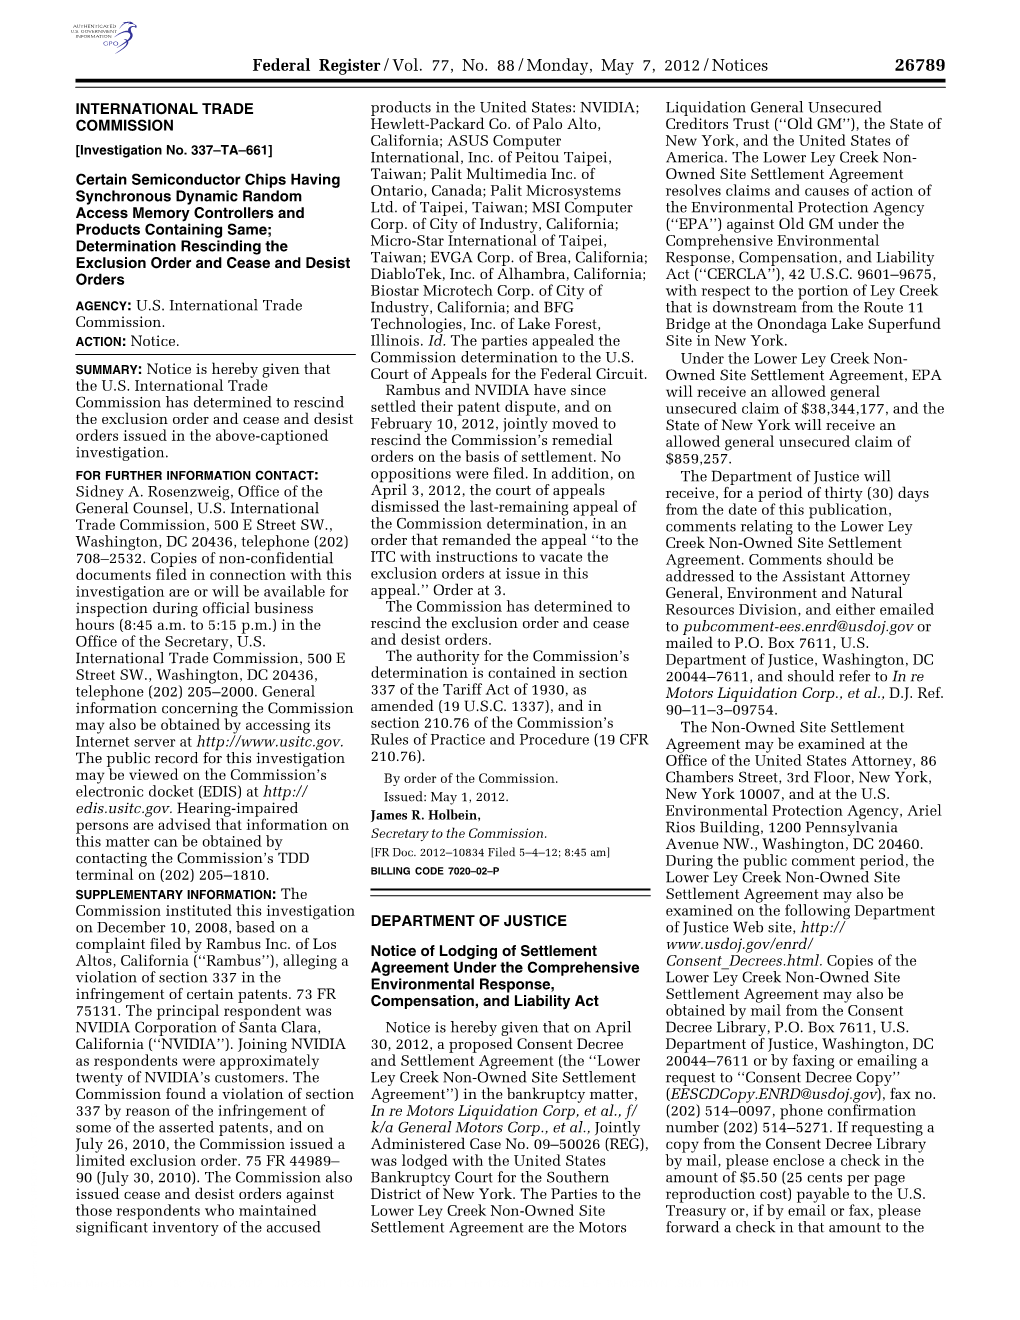 Federal Register/Vol. 77, No. 88/Monday, May 7, 2012/Notices